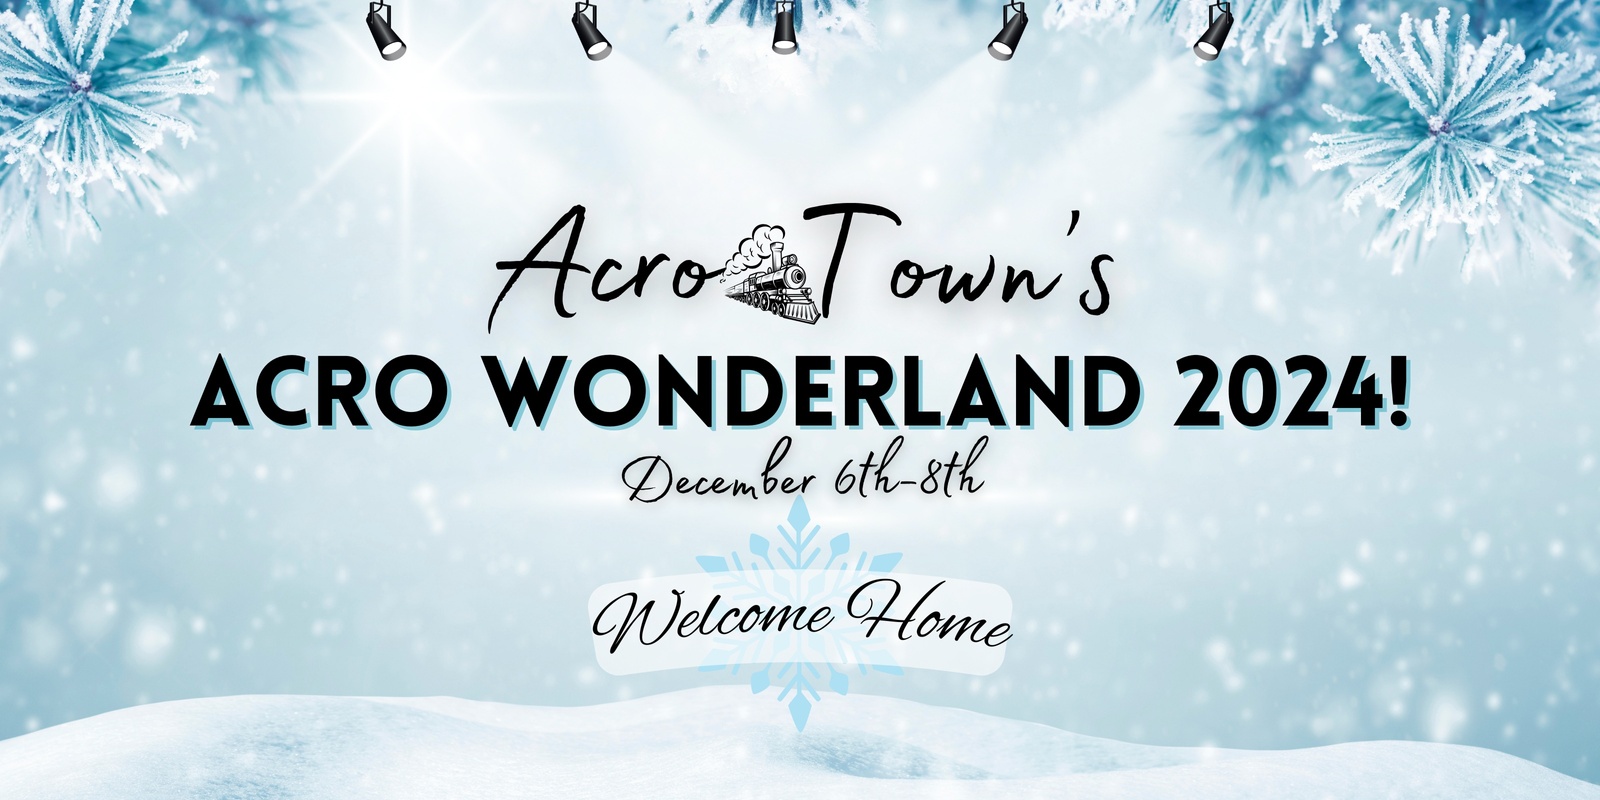 Banner image for Acro Wonderland 2024